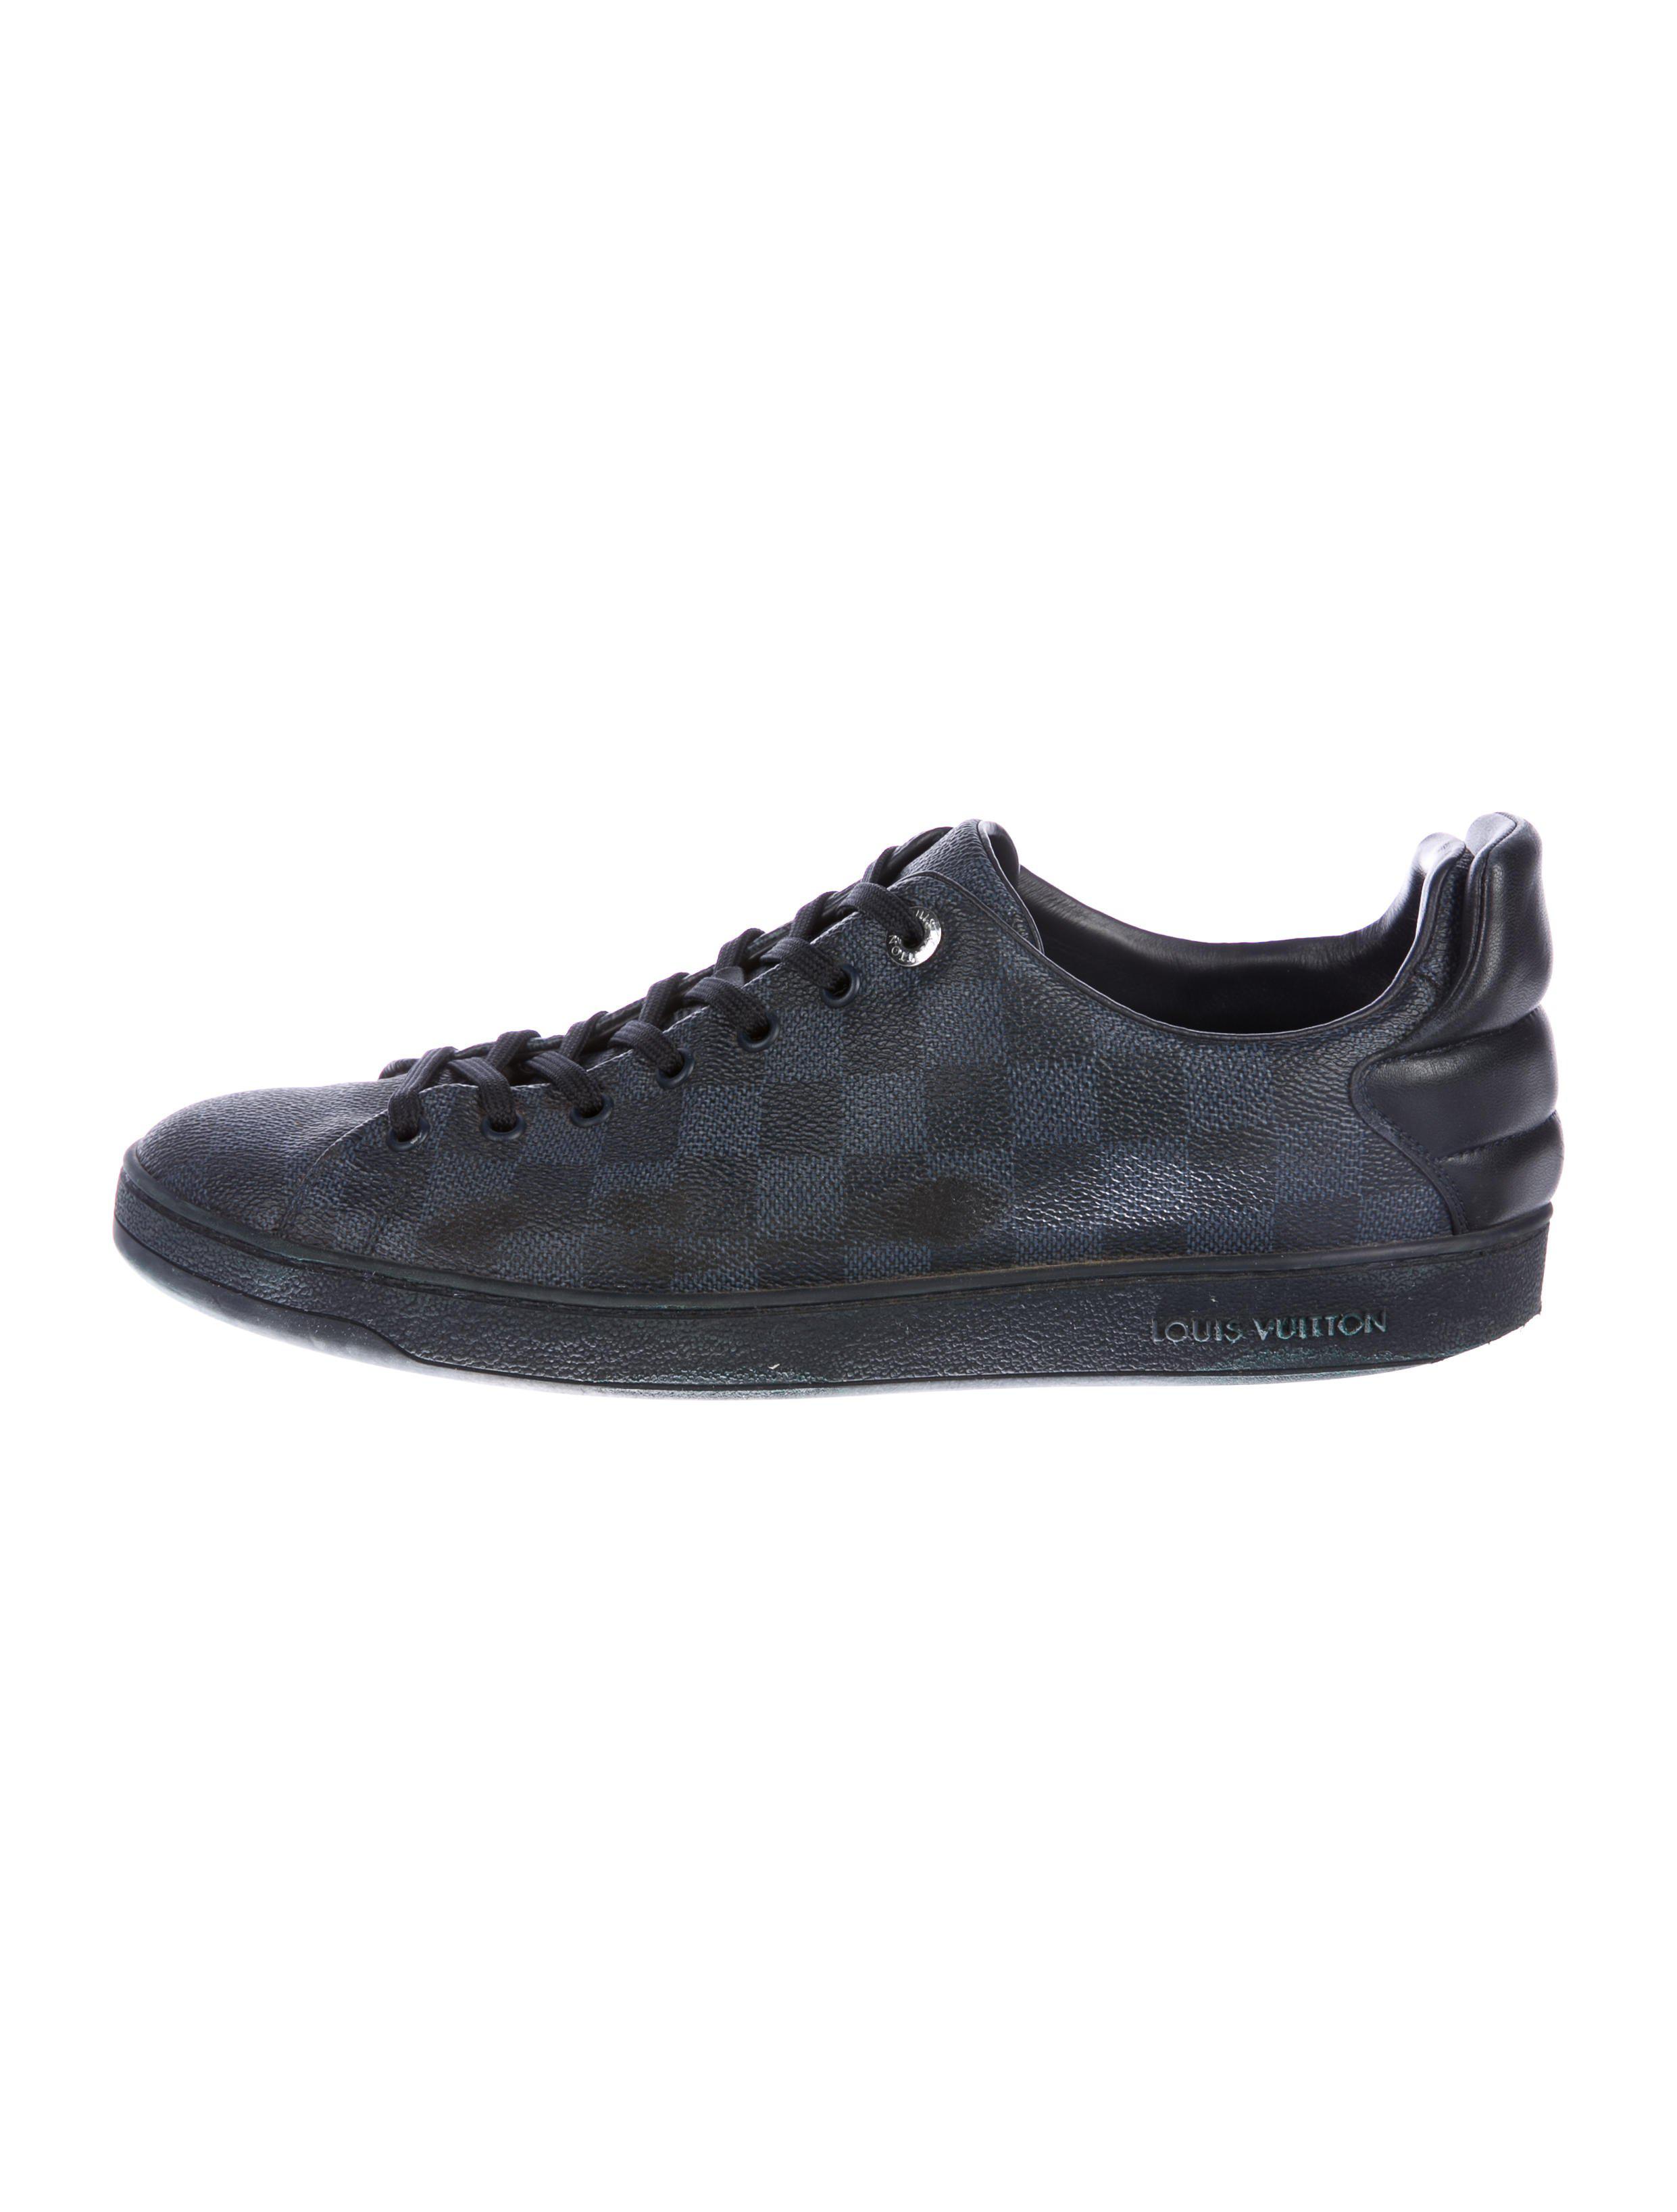 Lyst - Louis Vuitton 2016 Frontrow Damier Cobalt Sneakers in Black for Men